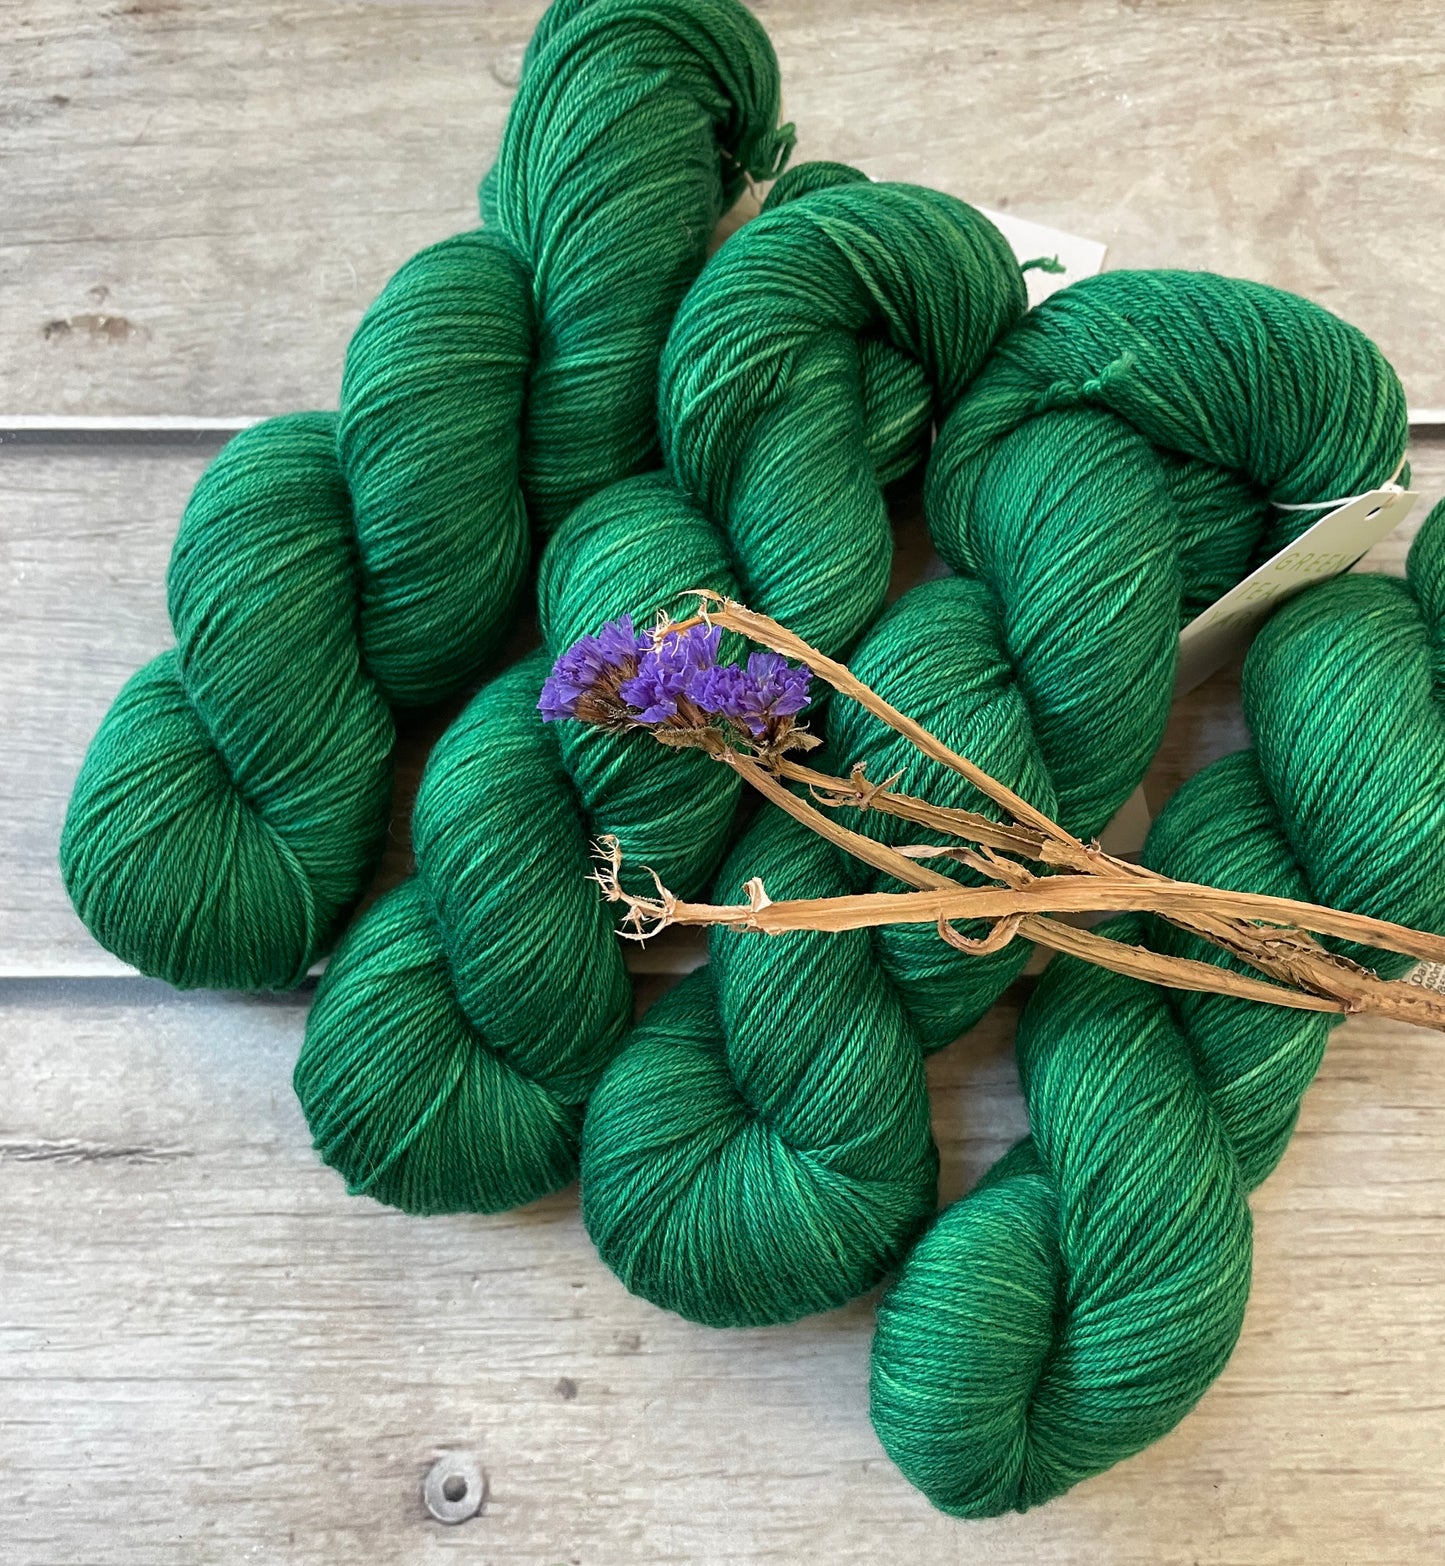 Everglades - sock yarn in merino and nylon - Darjeeling